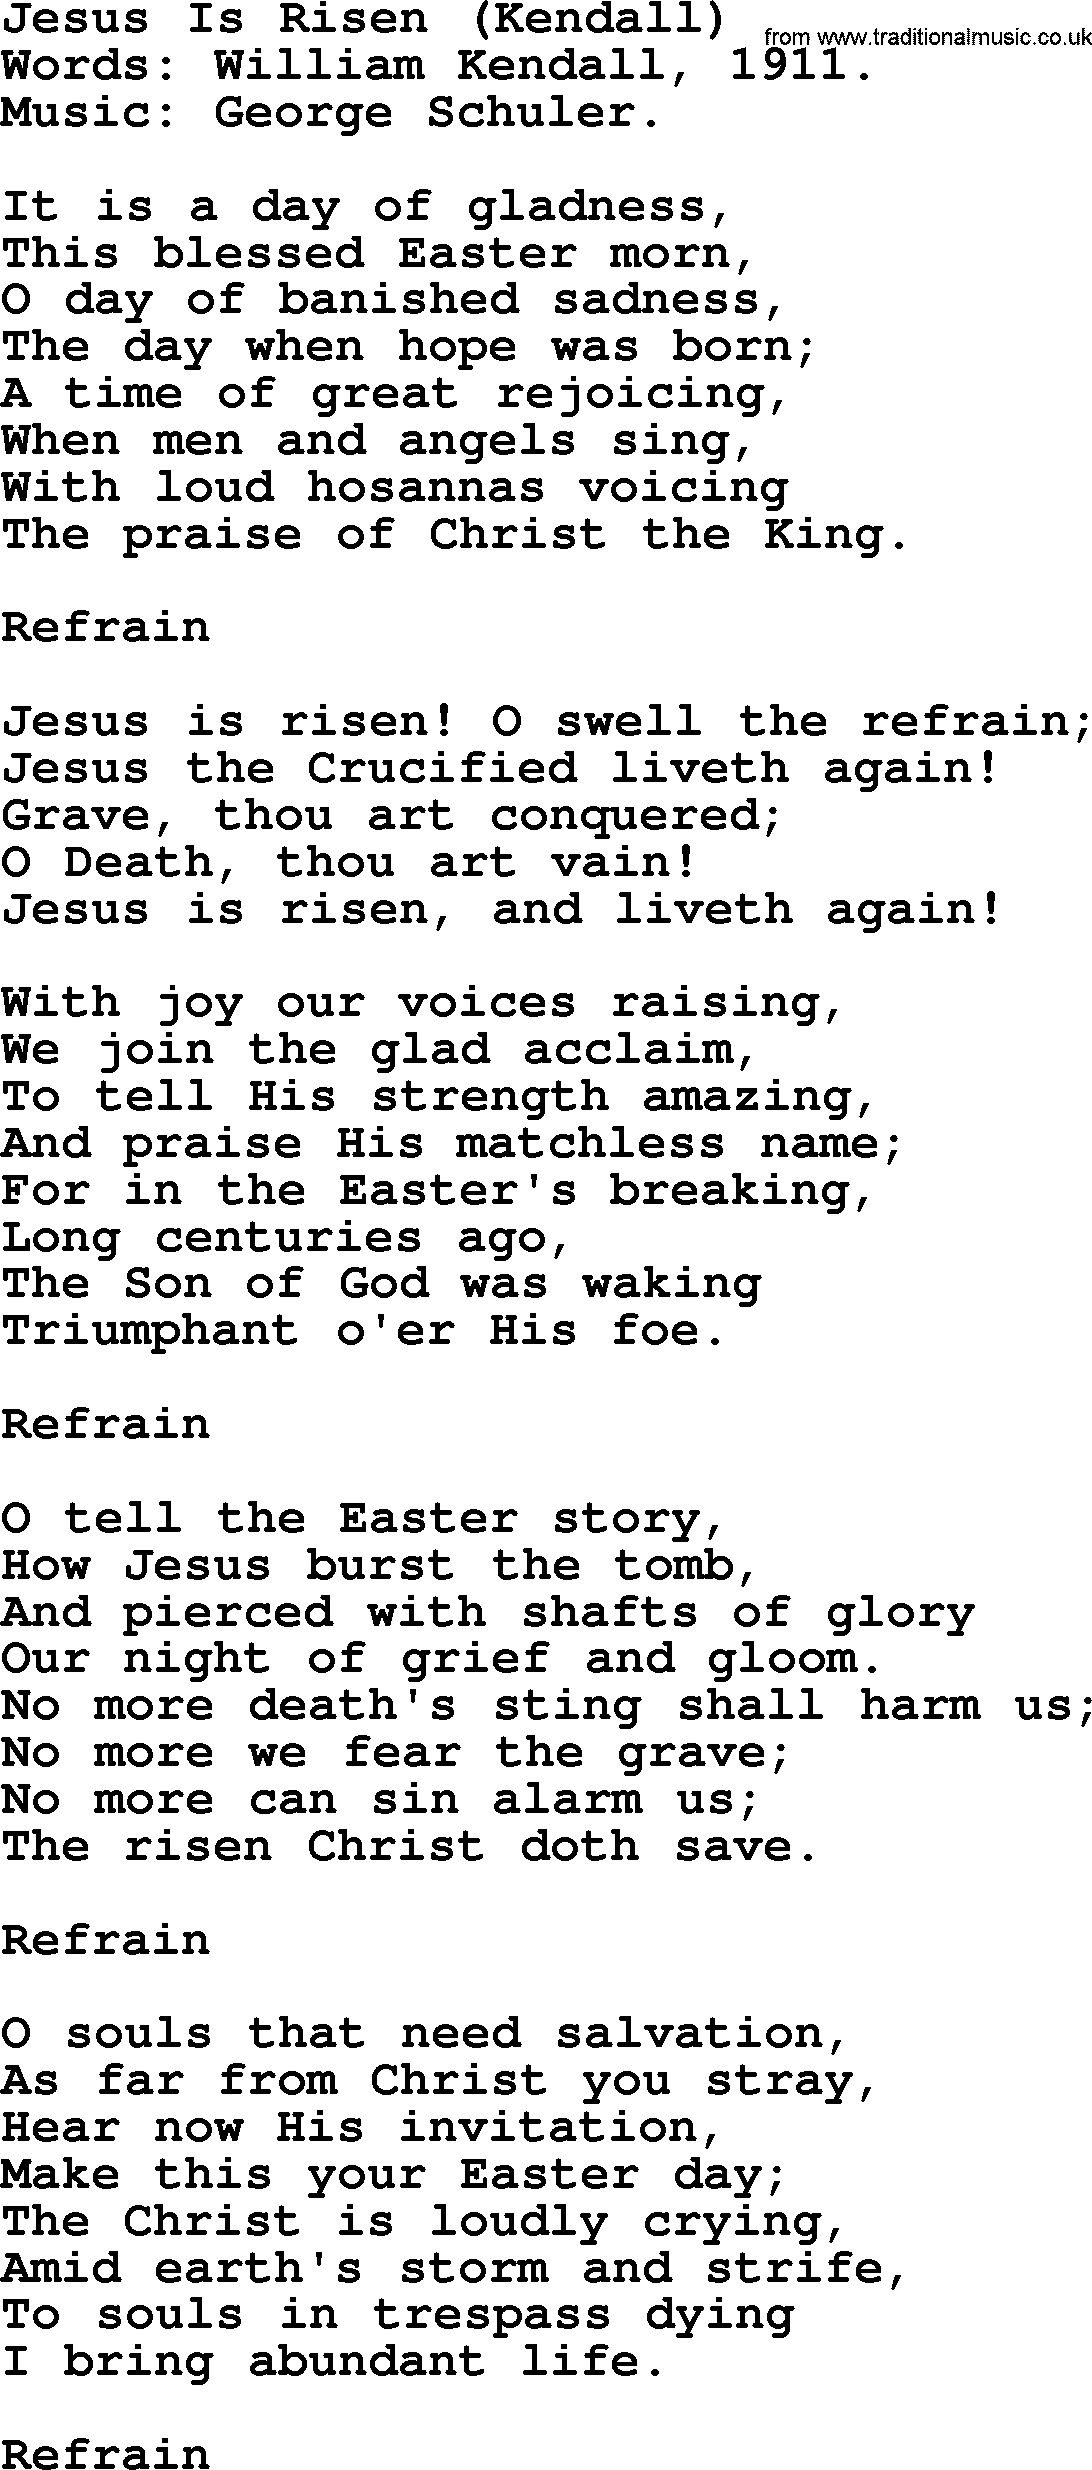 Easter Hymns, Hymn: Jesus Is Risen (kendall), lyrics with PDF